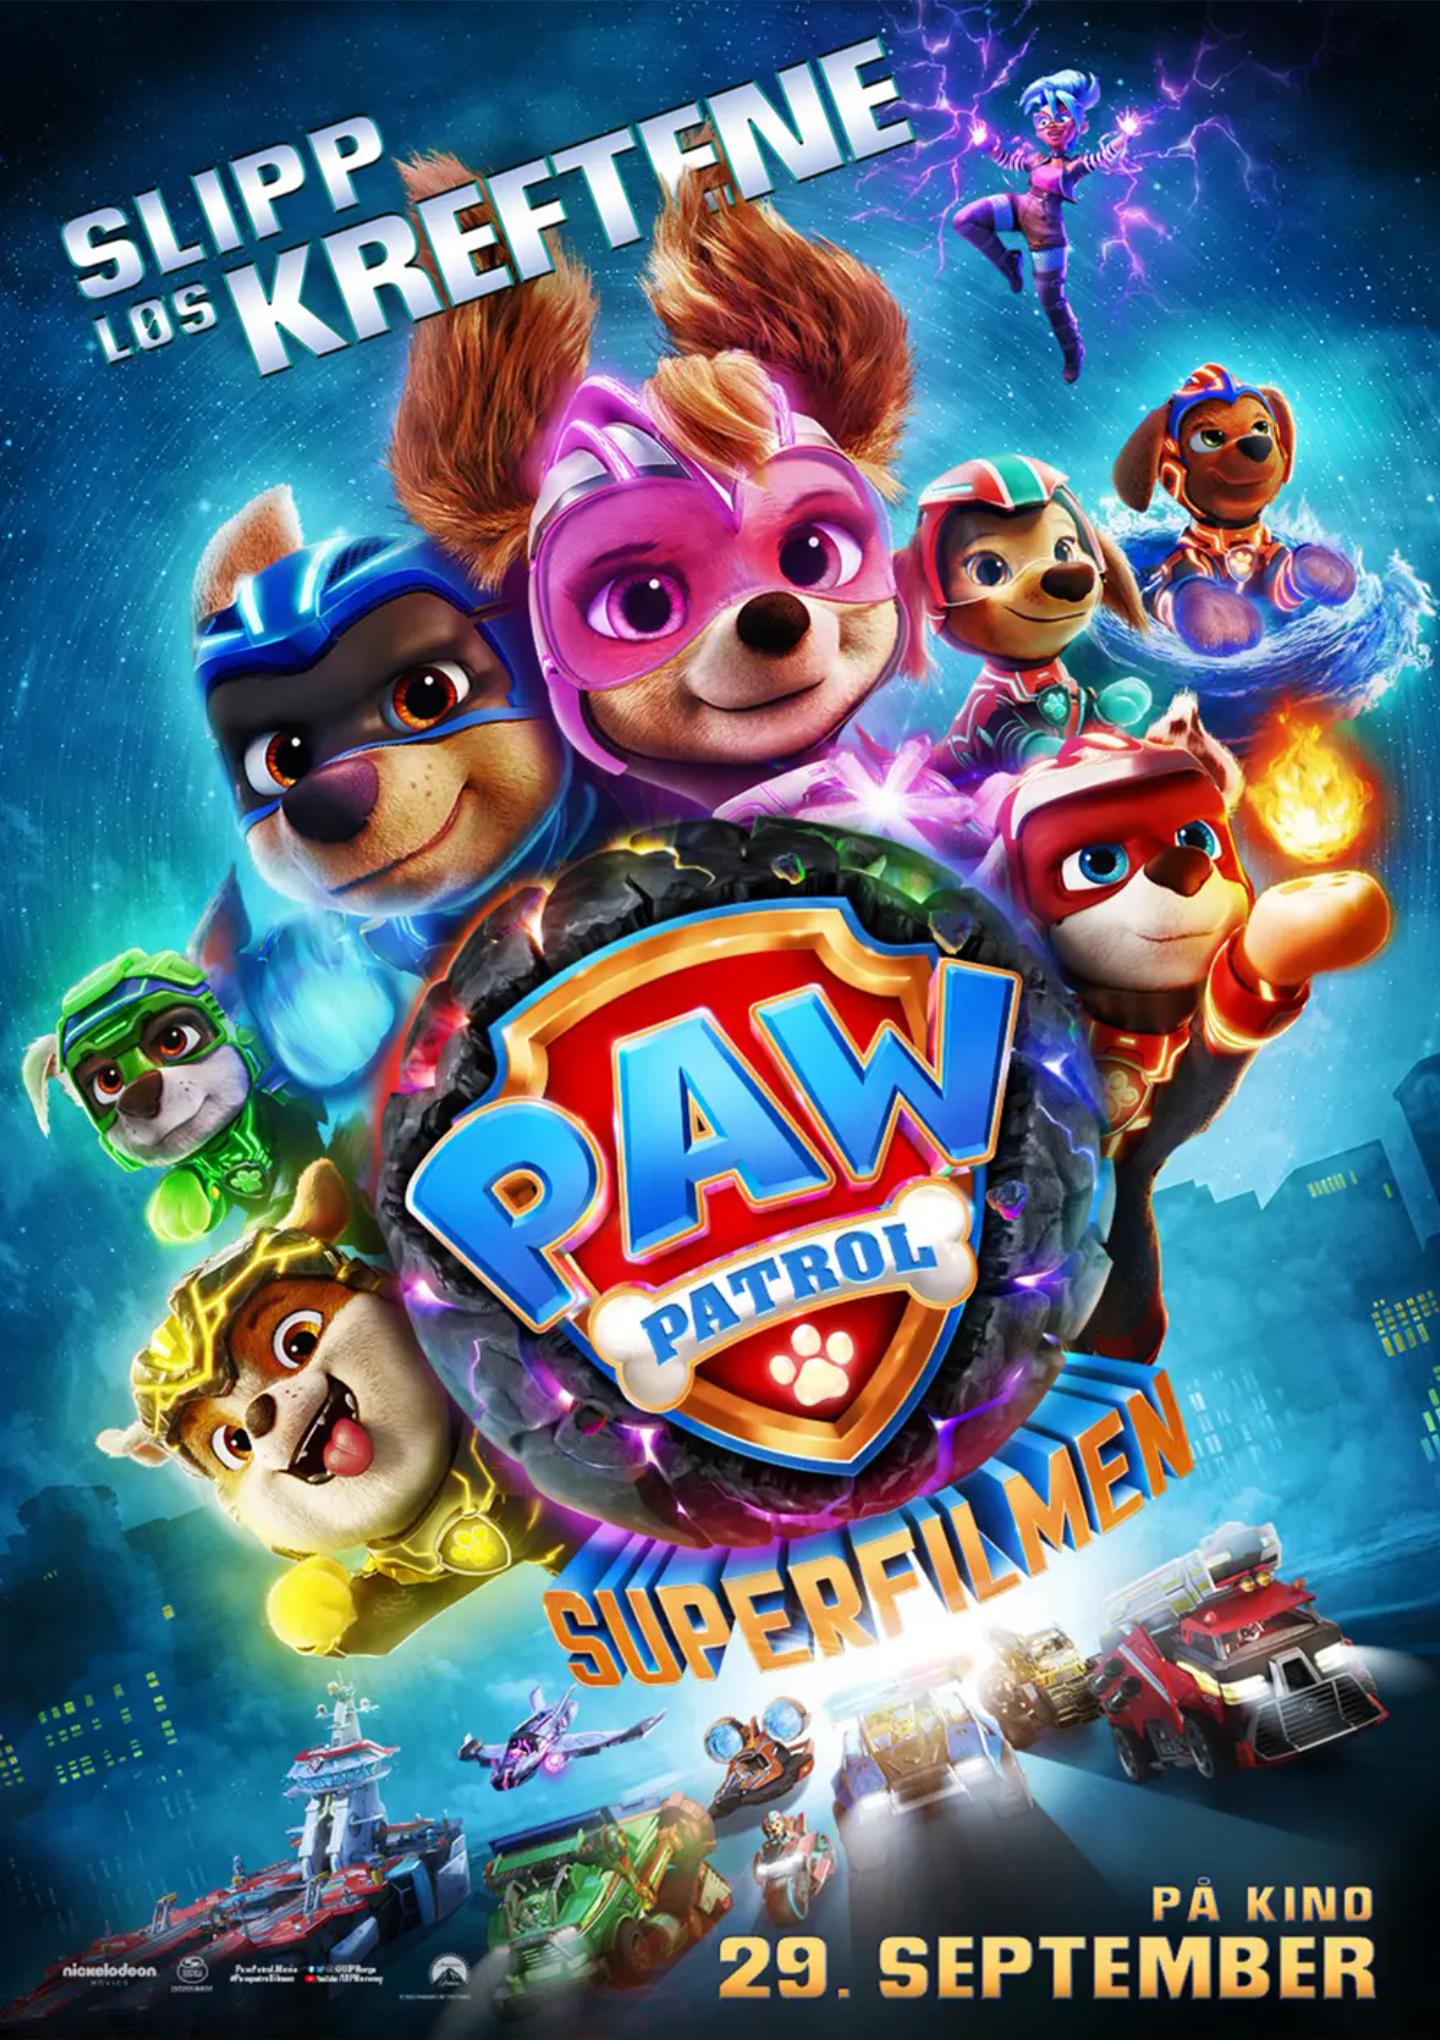 Plakat for 'Paw Patrol: Superfilmen'